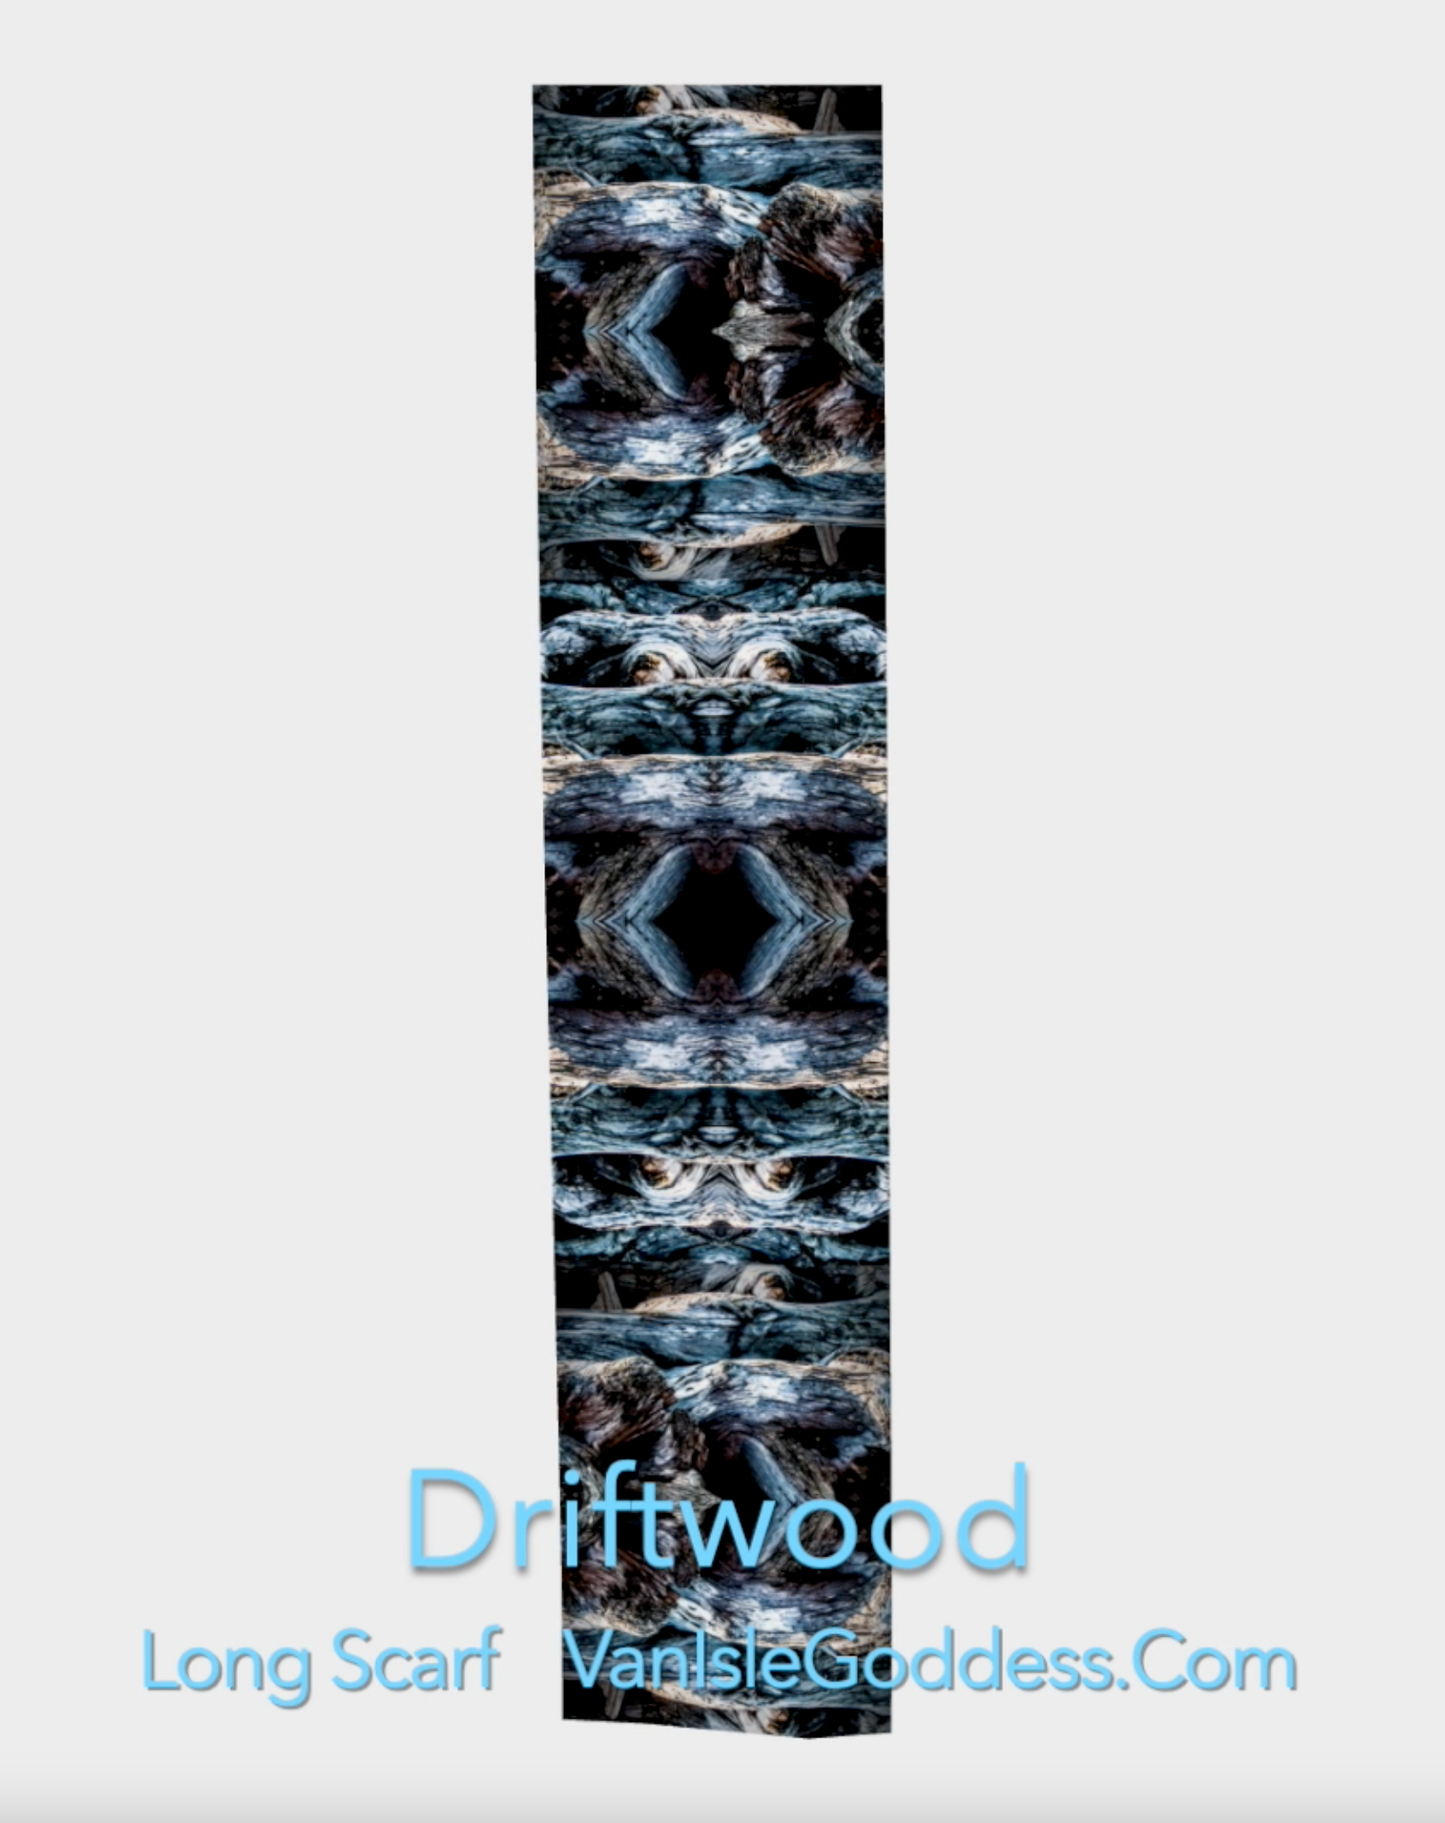 Driftwood long scarf shown full length.